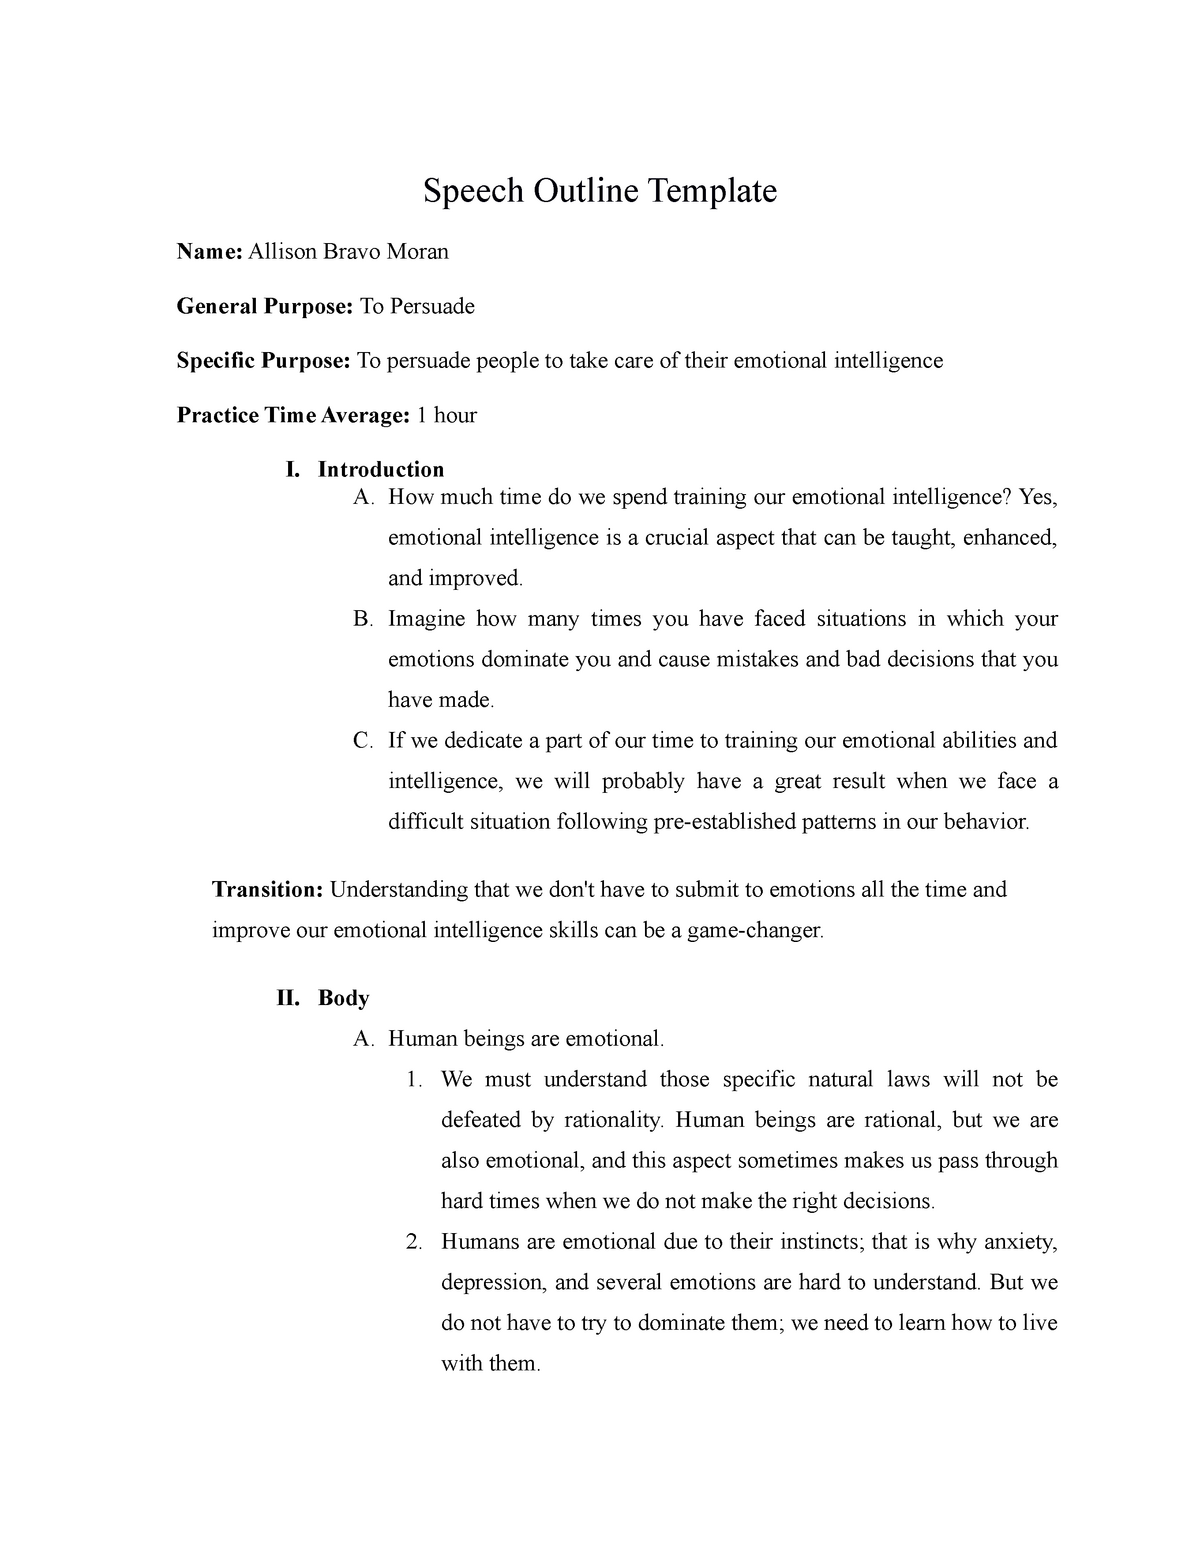 ted-talk-speech-outline-speech-outline-template-name-allison-bravo-moran-general-purpose-to